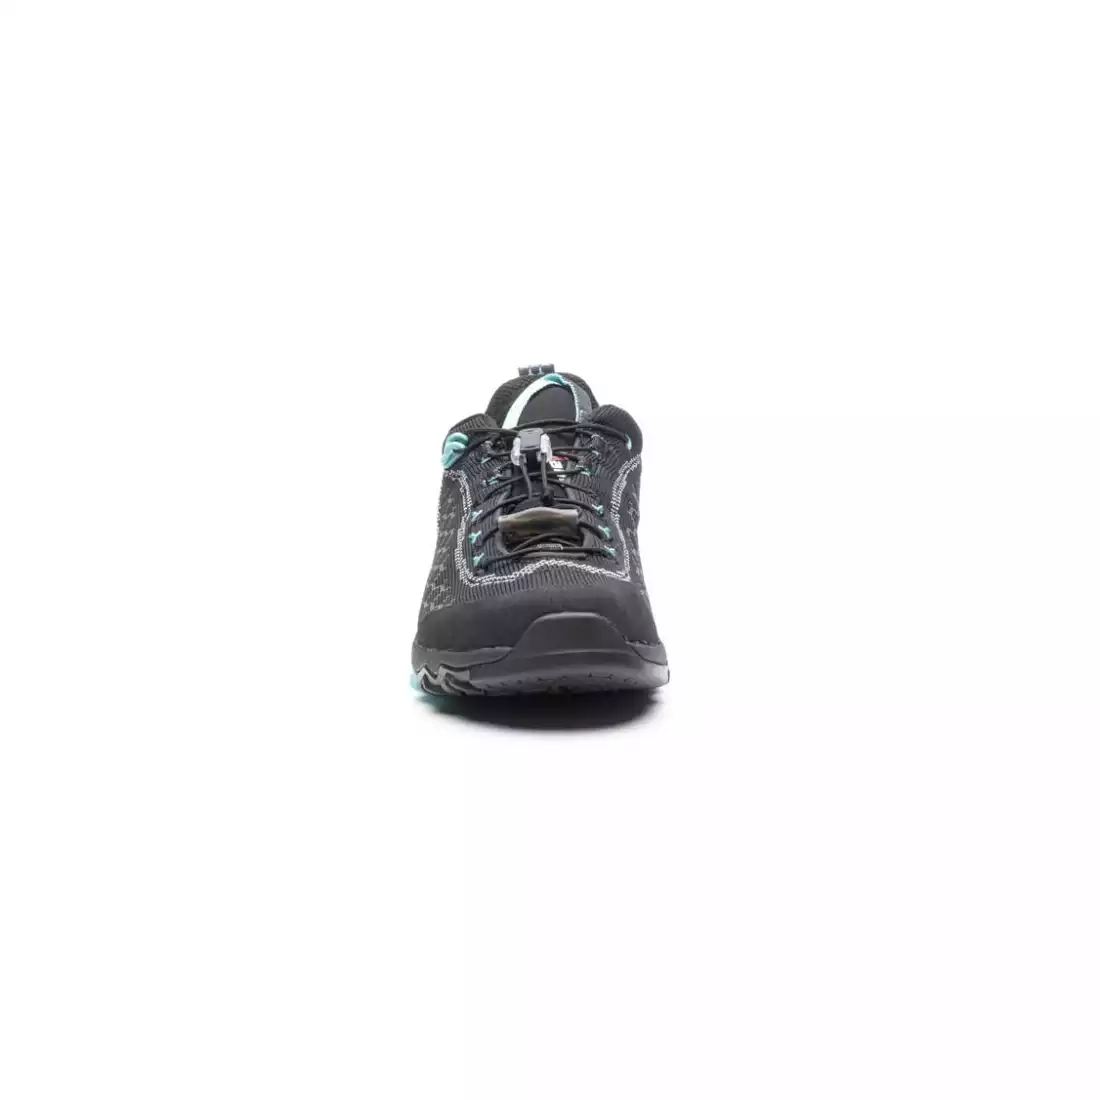 KAYLAND ALPHA KNIT W`S Women's trekking shoes, VIBRAM, black and blue